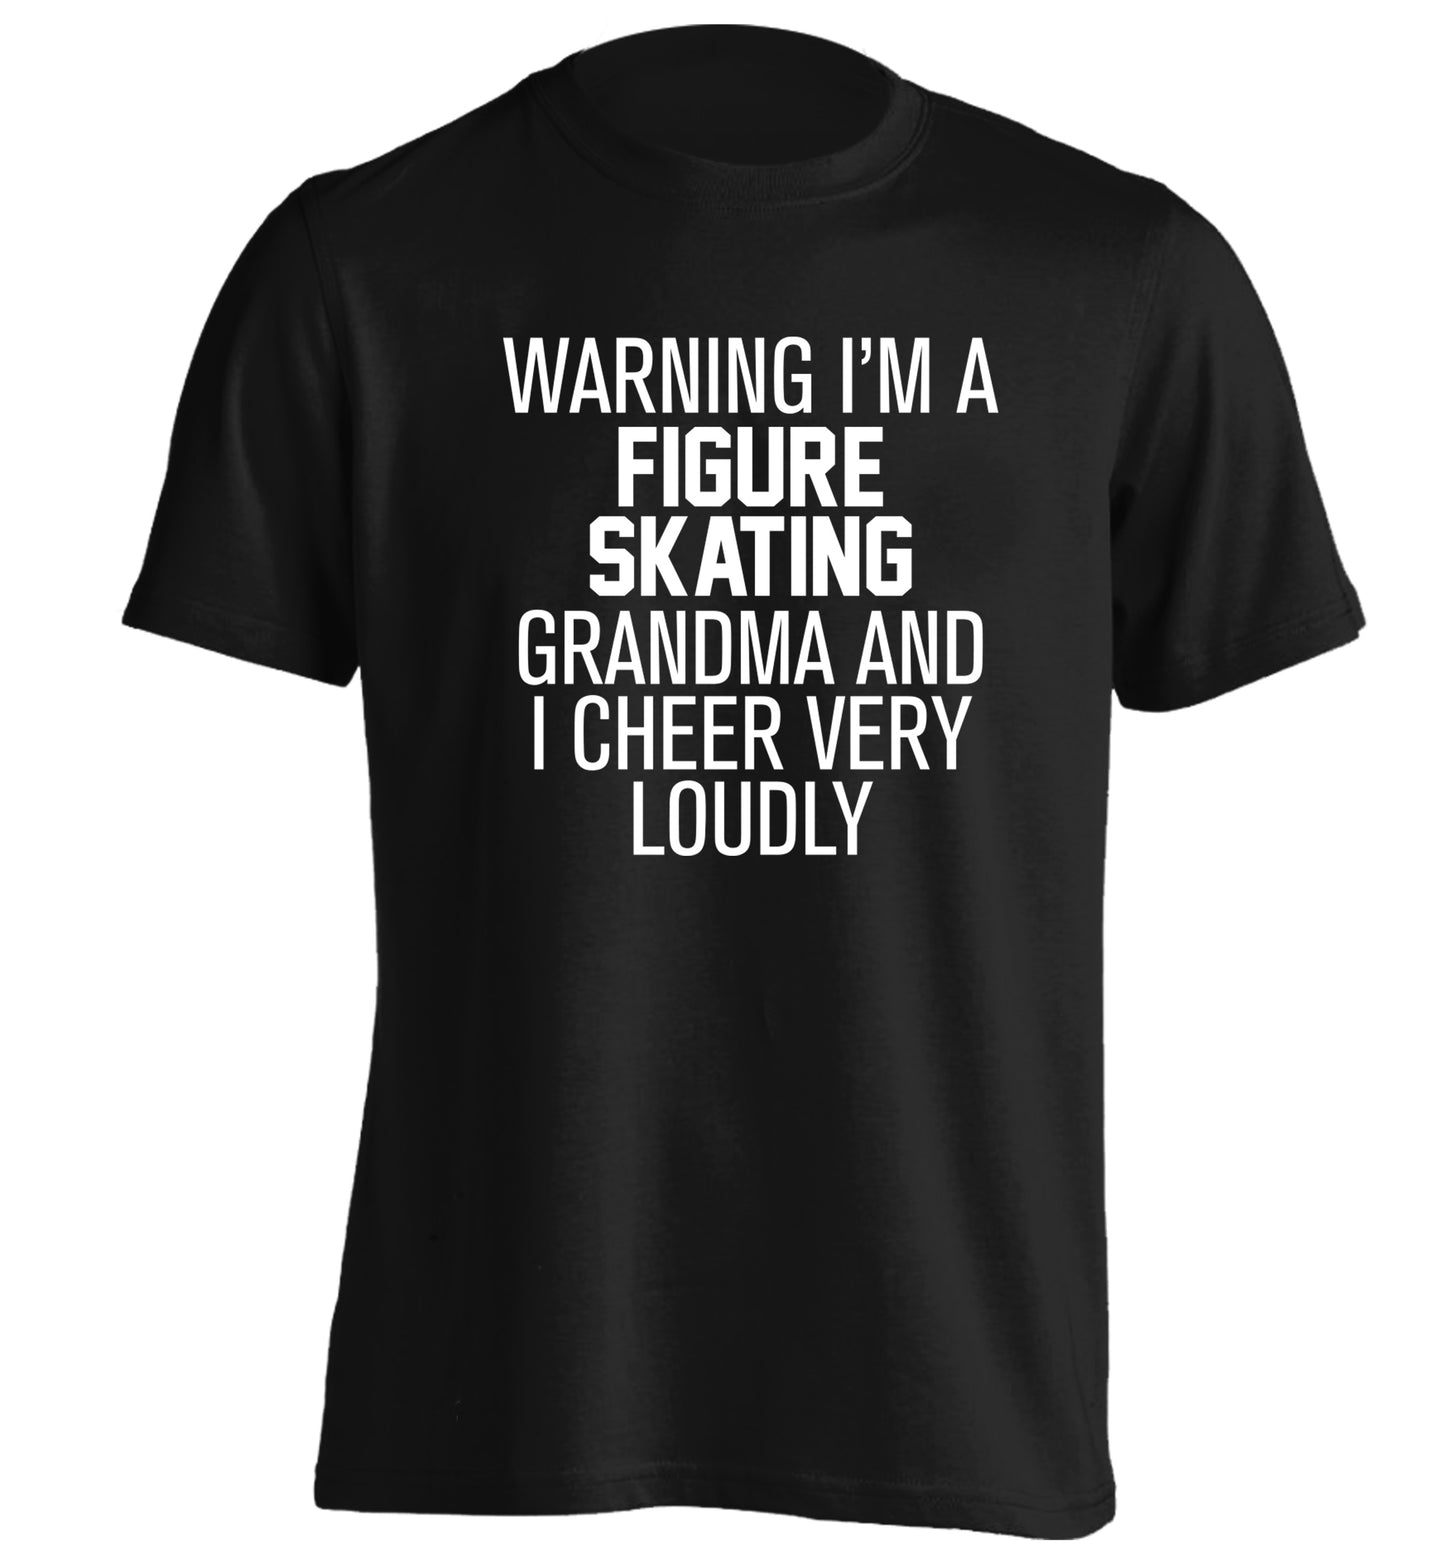 Warning I'm a figure skating grandma and I cheer very loudly adults unisexblack Tshirt 2XL